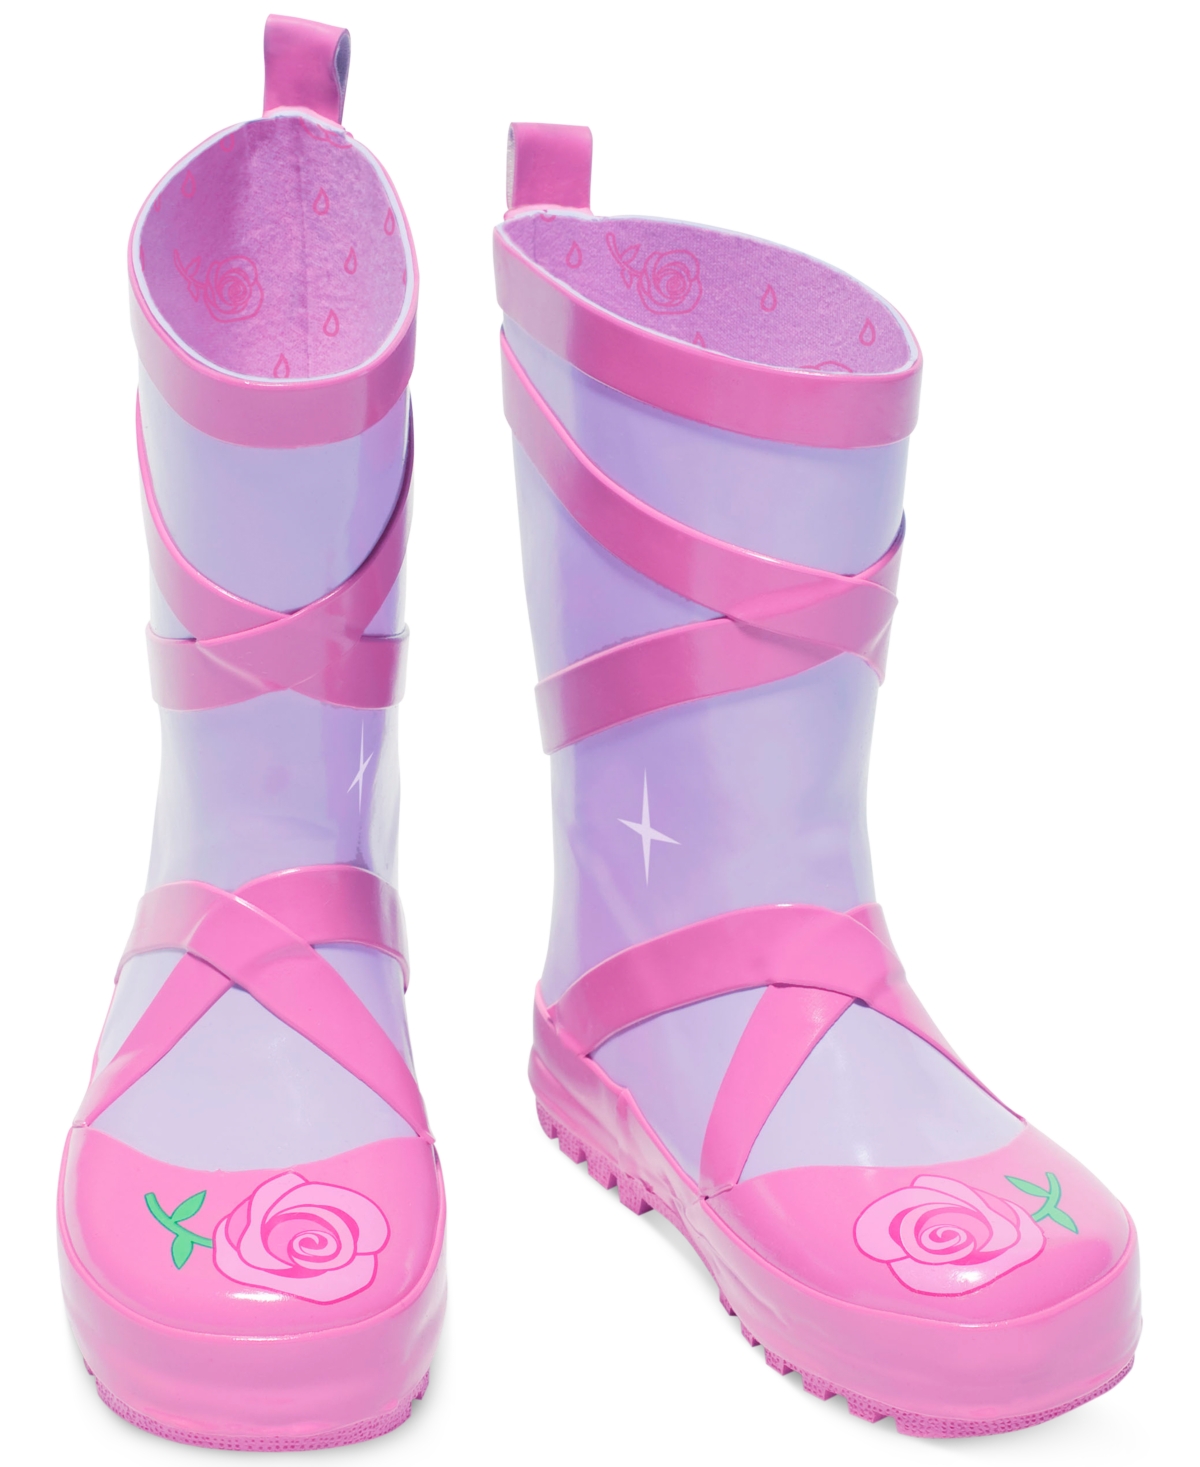 Kidorable Little Girls' Ballet Rain Boots